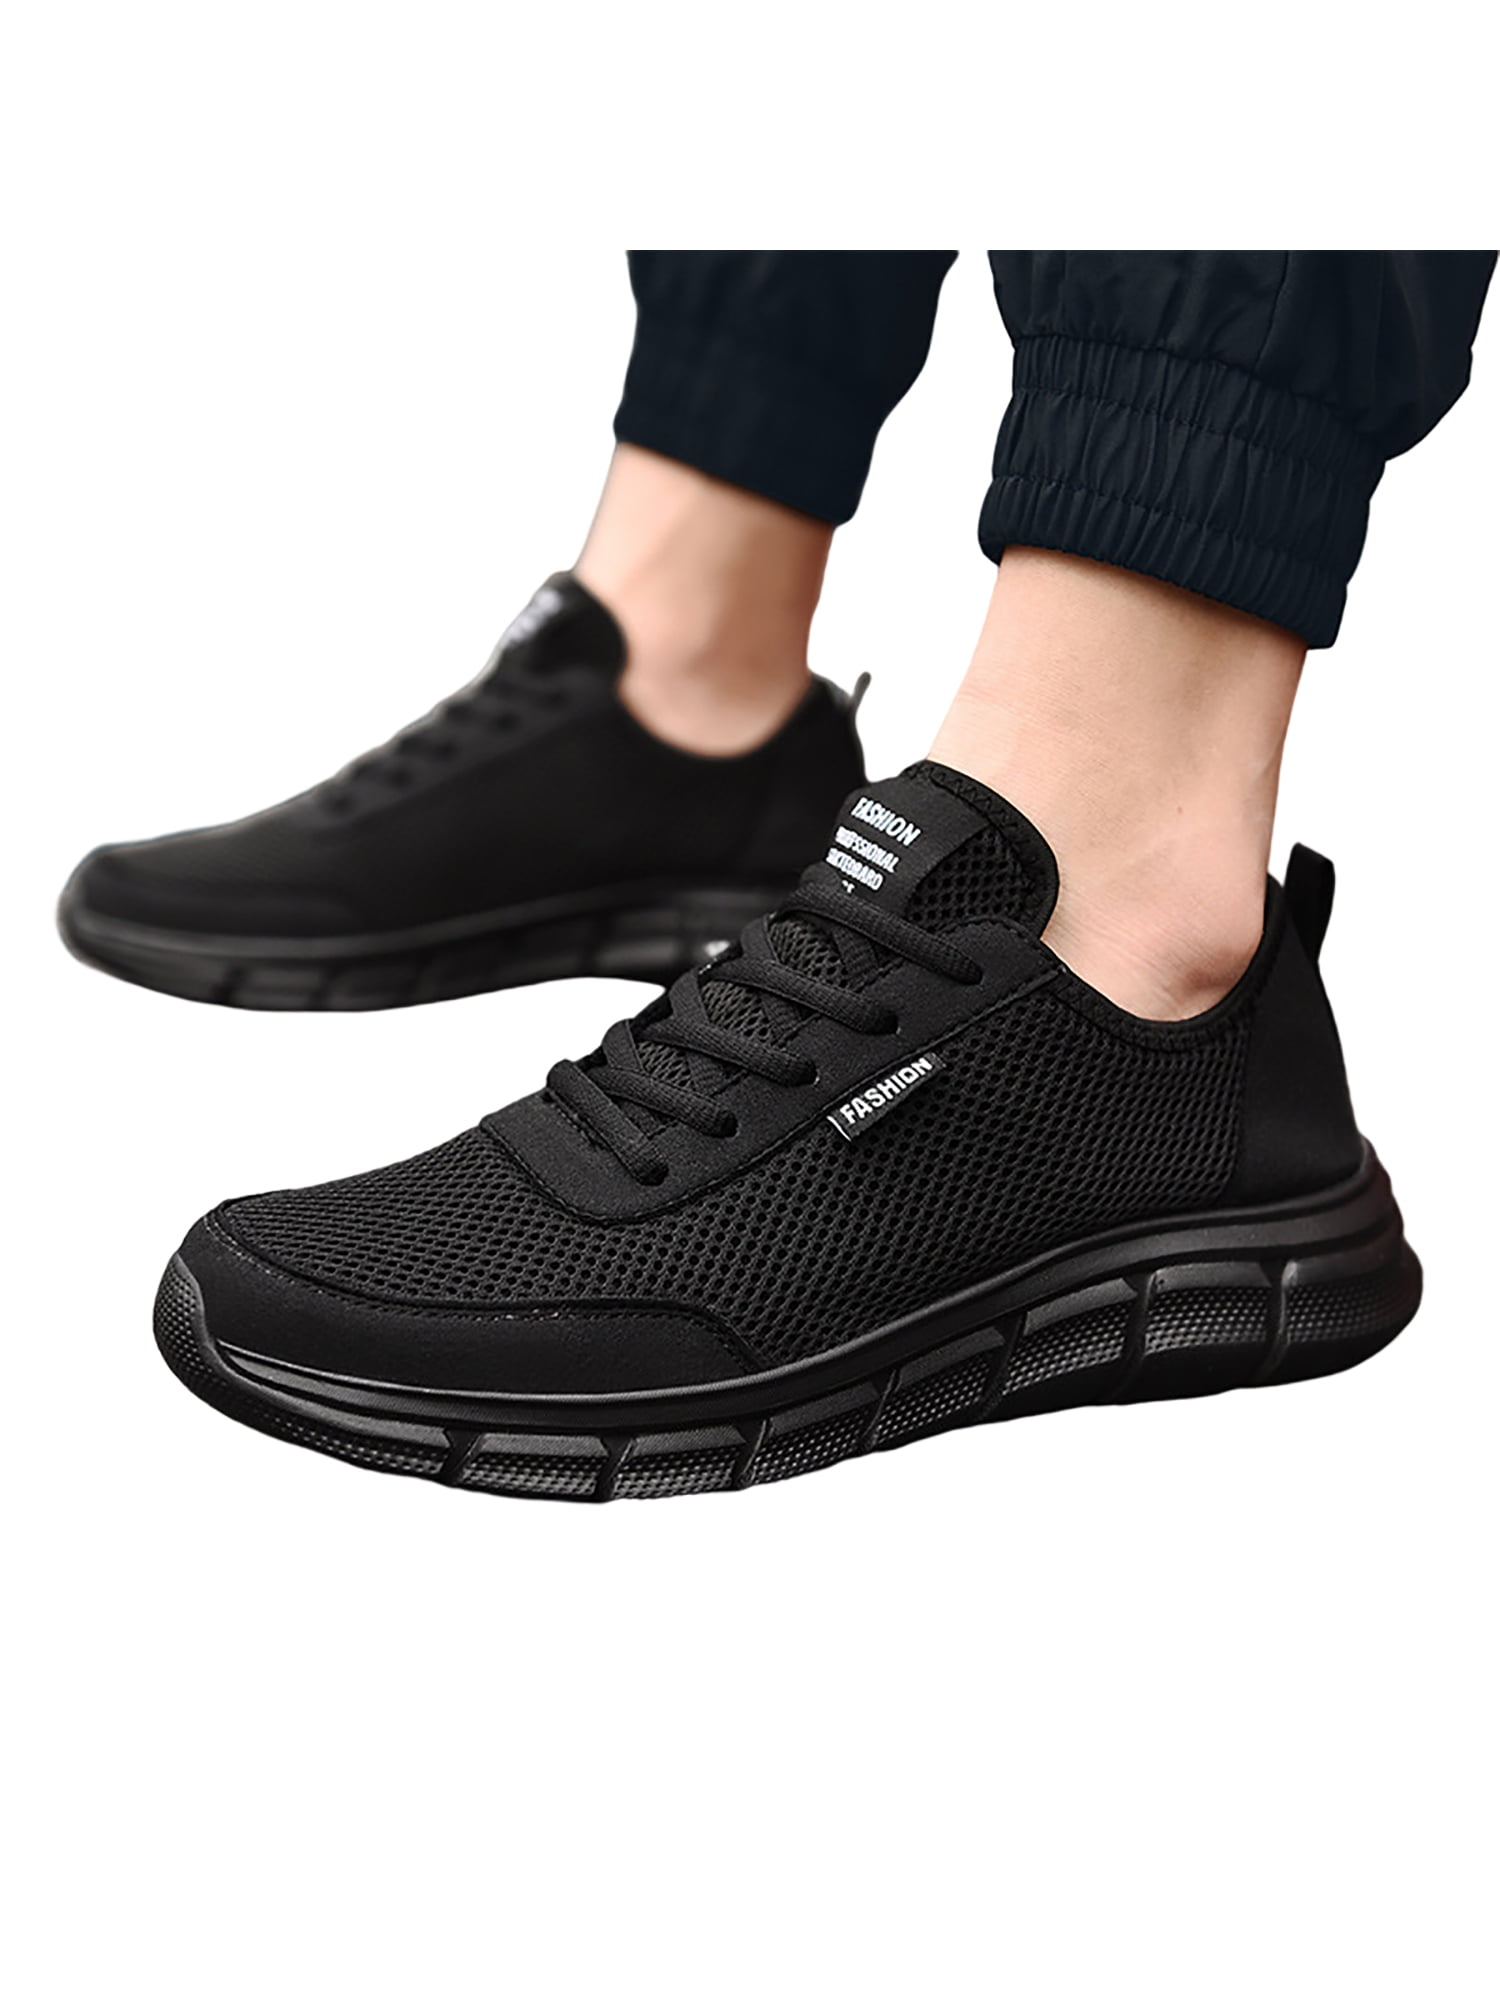 Bellella Sneakers for Men Fashion Shoes Slip On All Black Sneakers ...